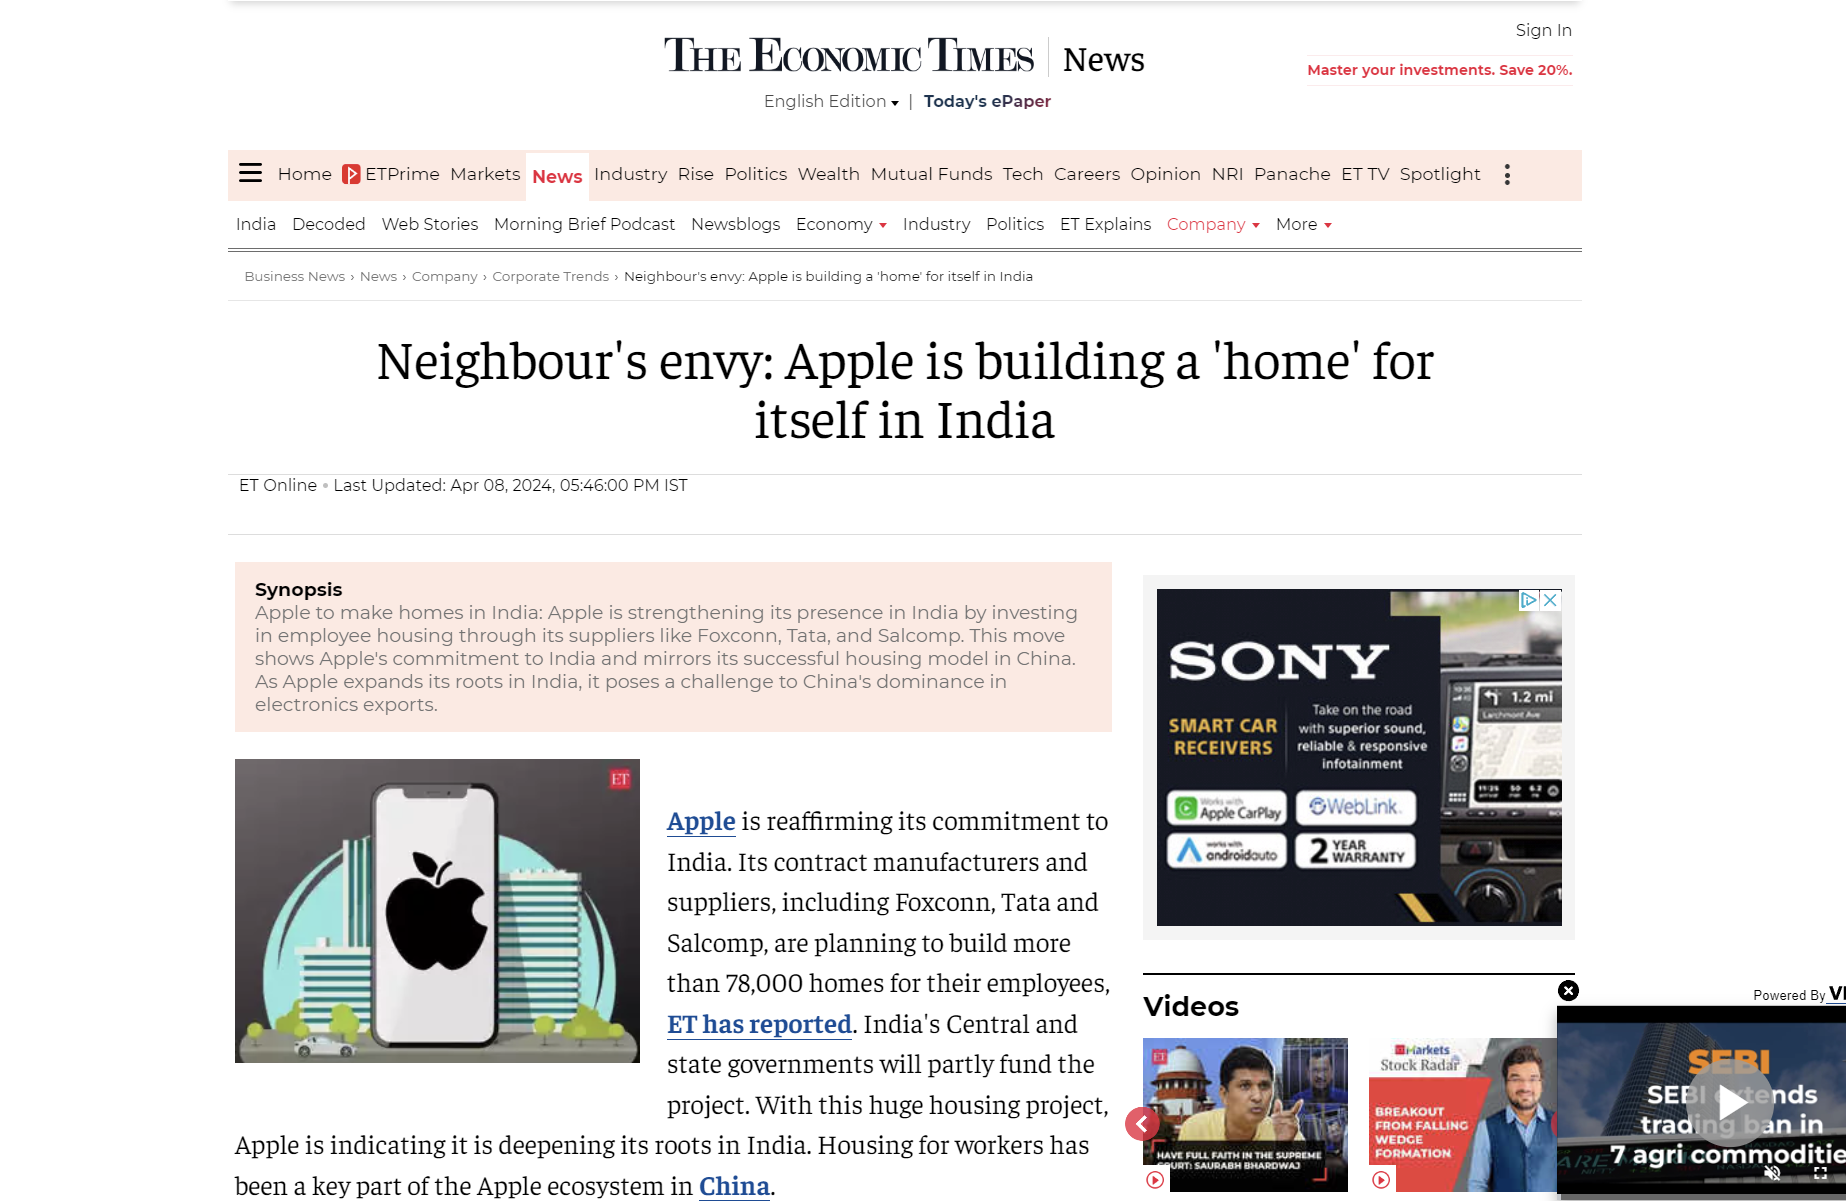 Economic Times: Η Apple ενισχύει το αποτύπωμά της στην Ινδία